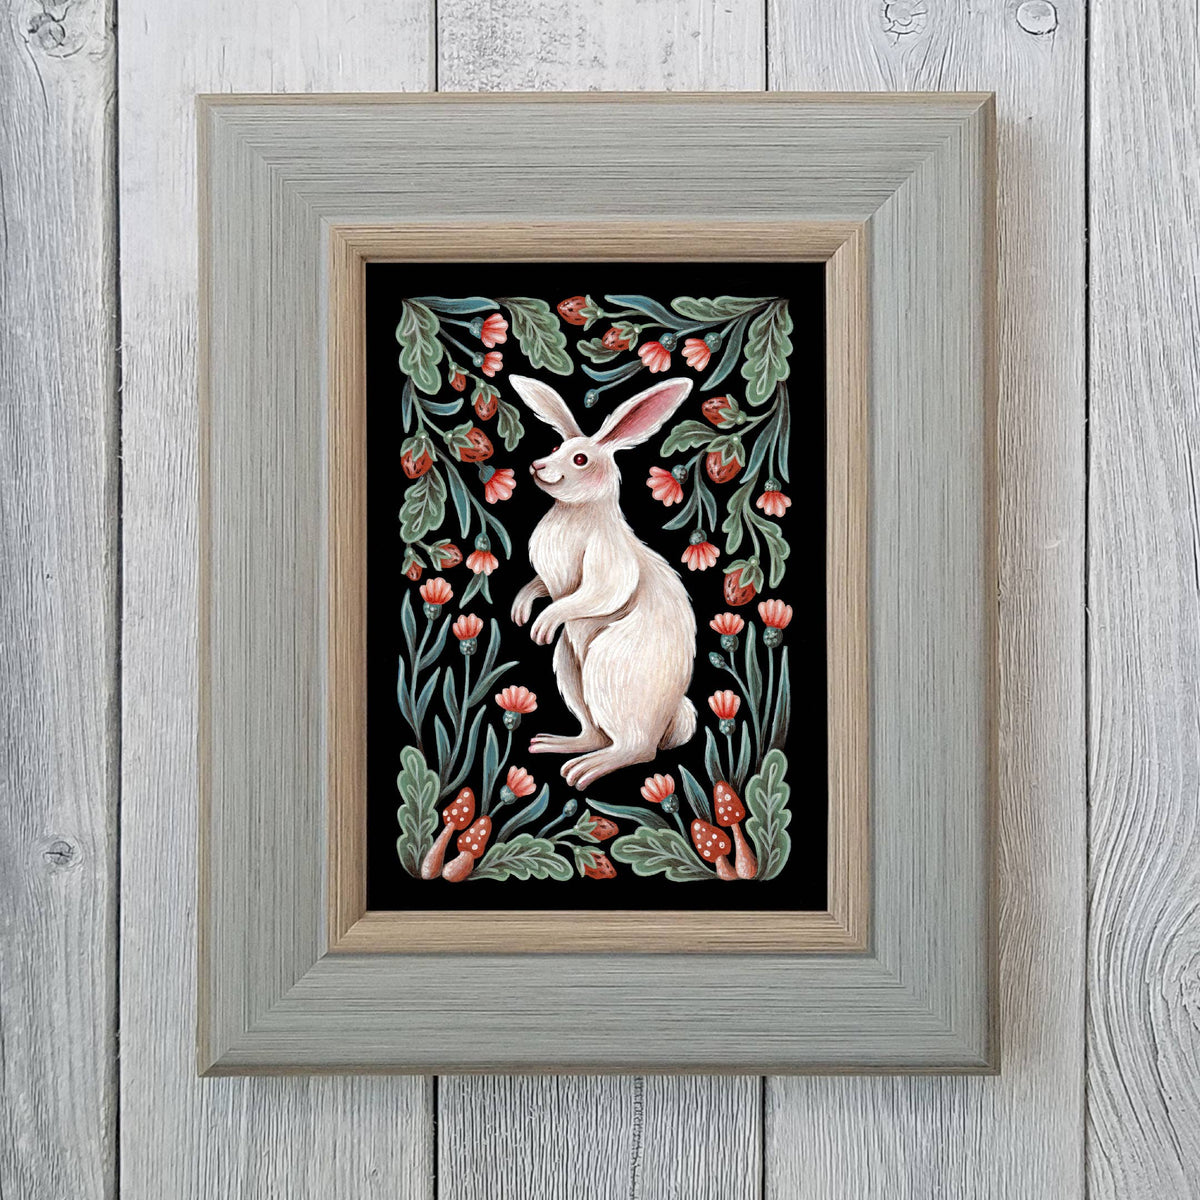 Faina Lorah Bunny Rabbit Art Print Folk Decor: 5x7